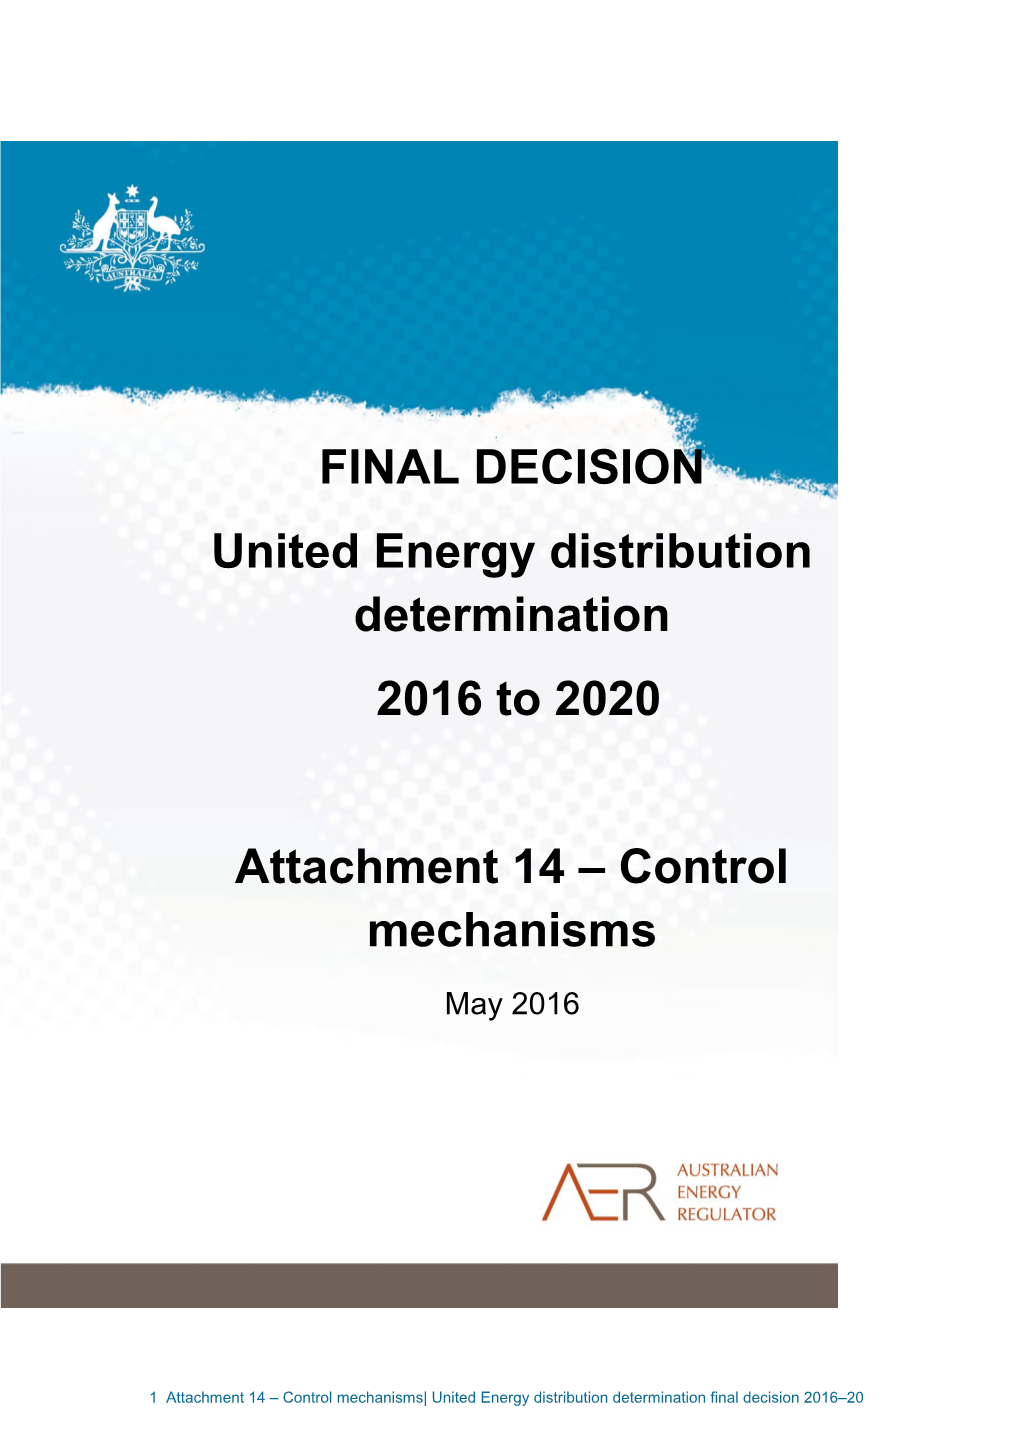 United Energy Distributiondetermination